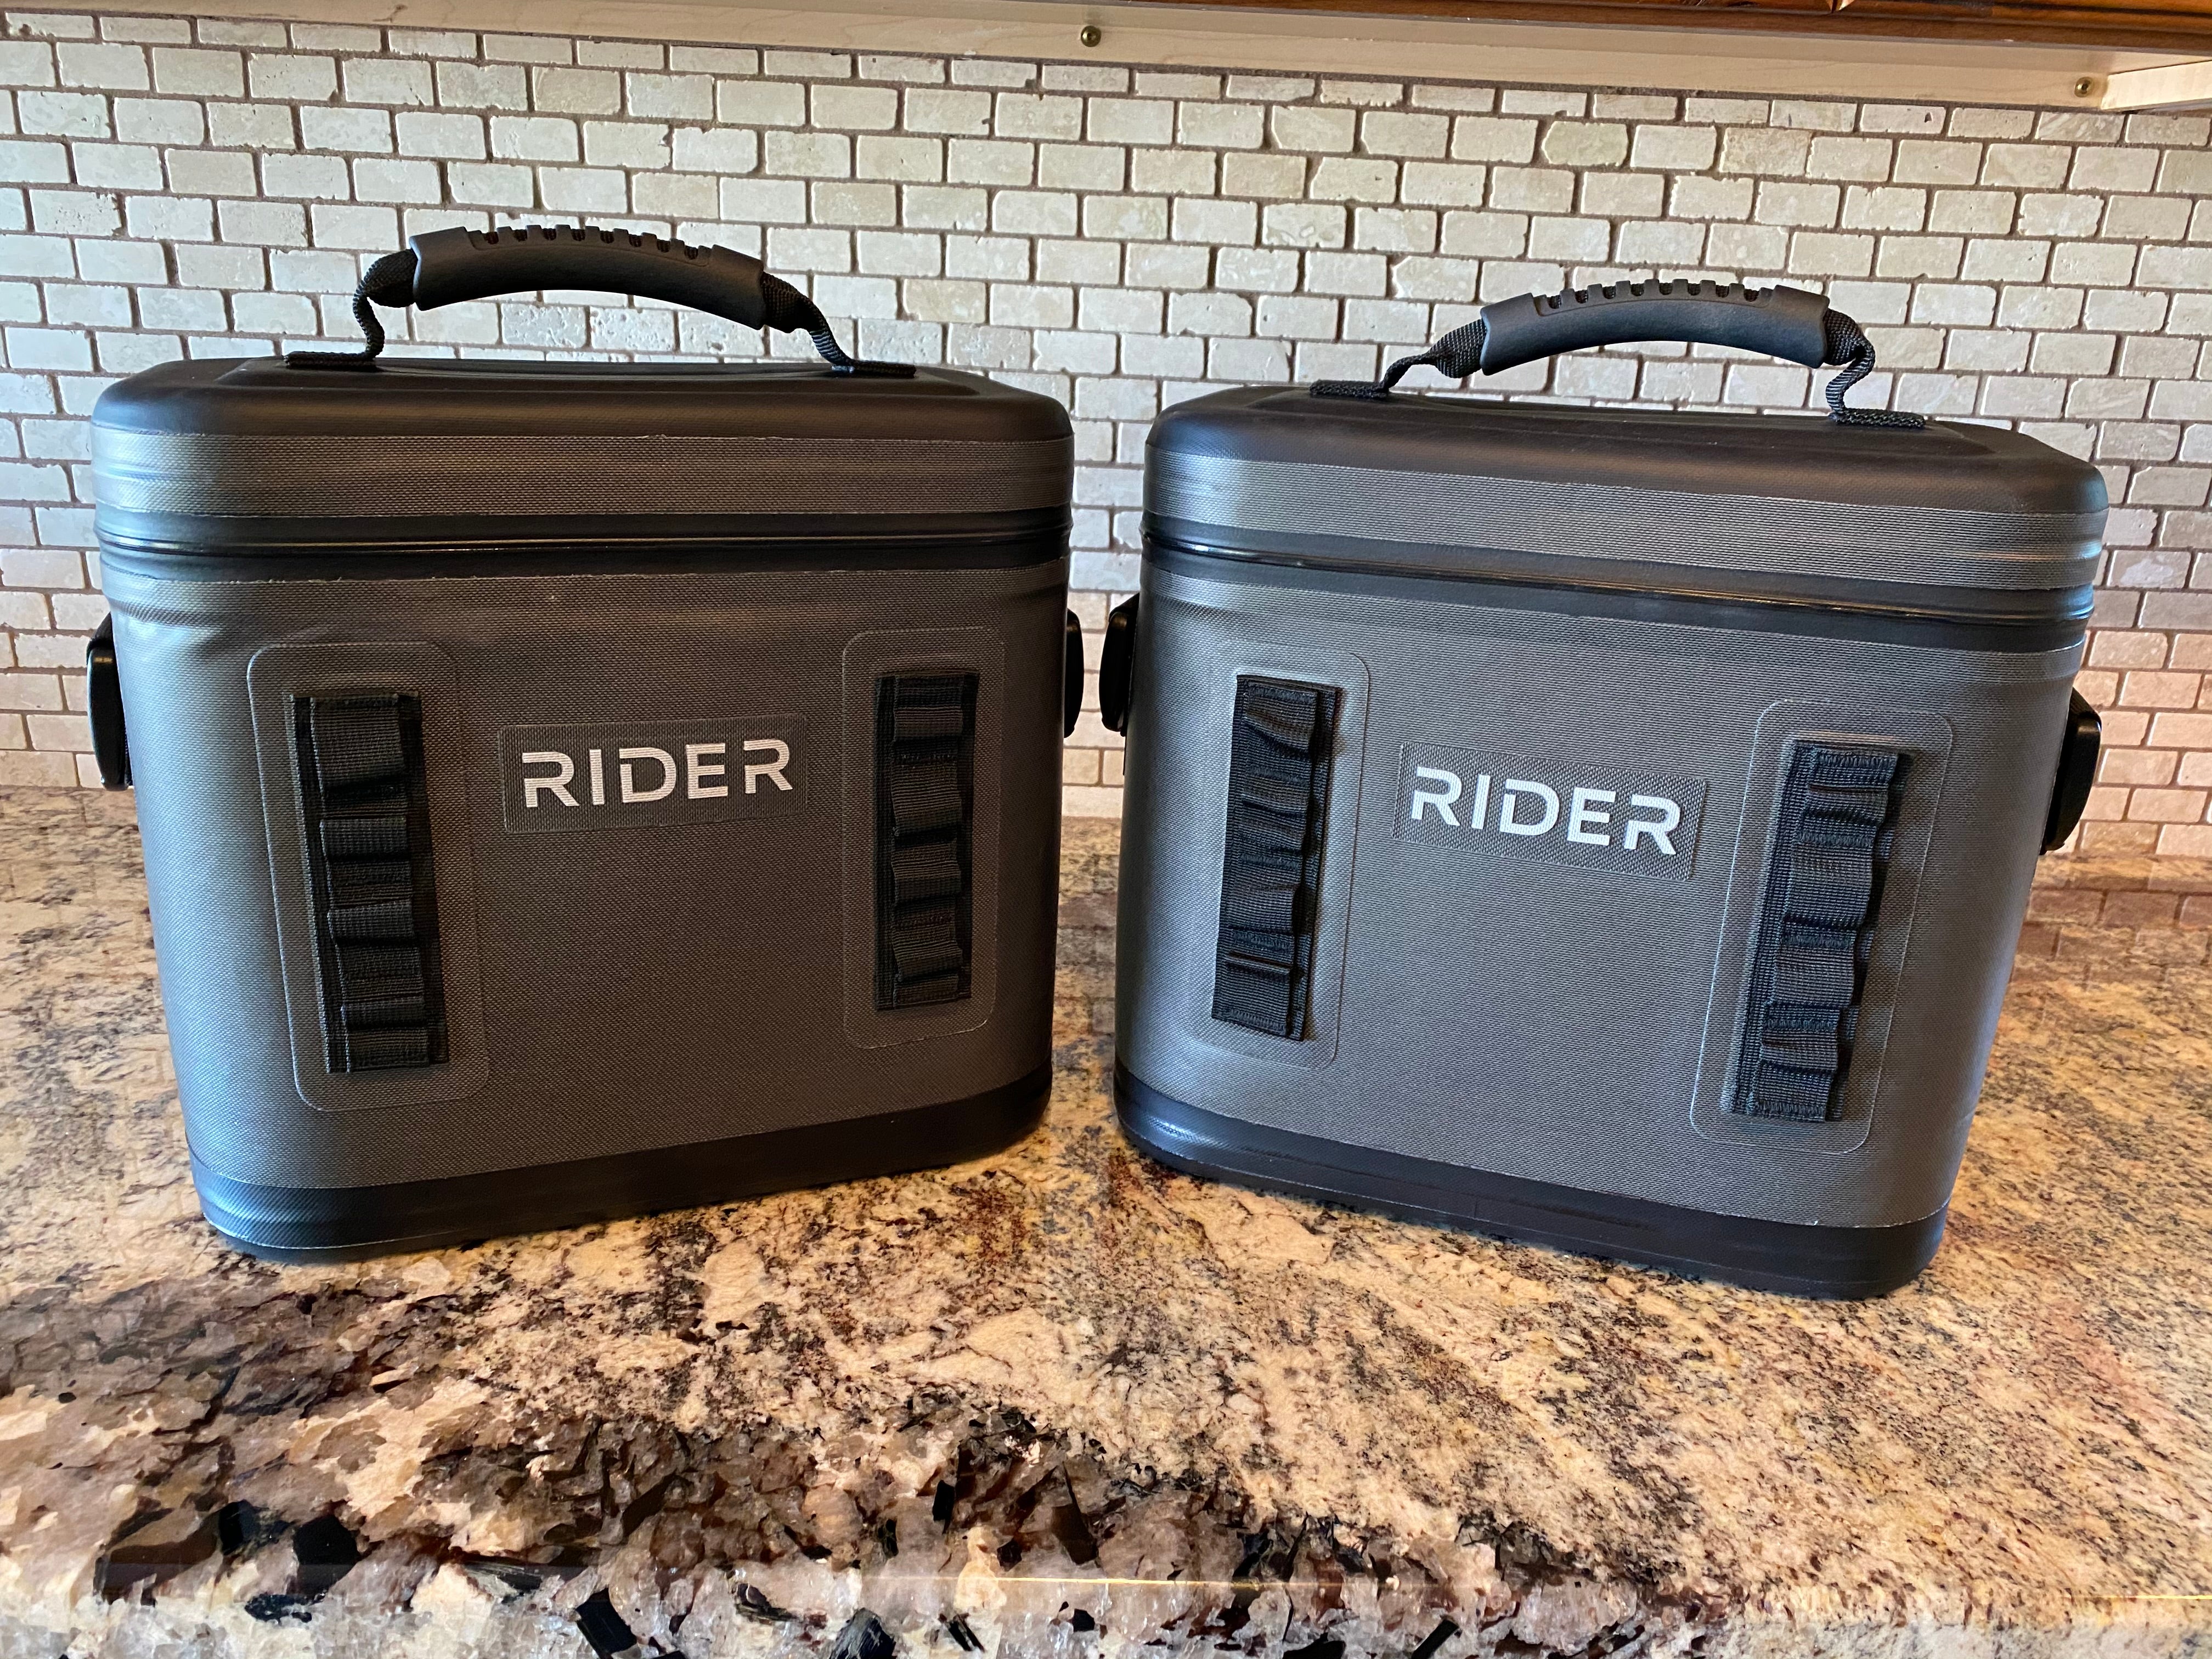 Gray PWC Rider Coolers Jet ski coolers Set of 2